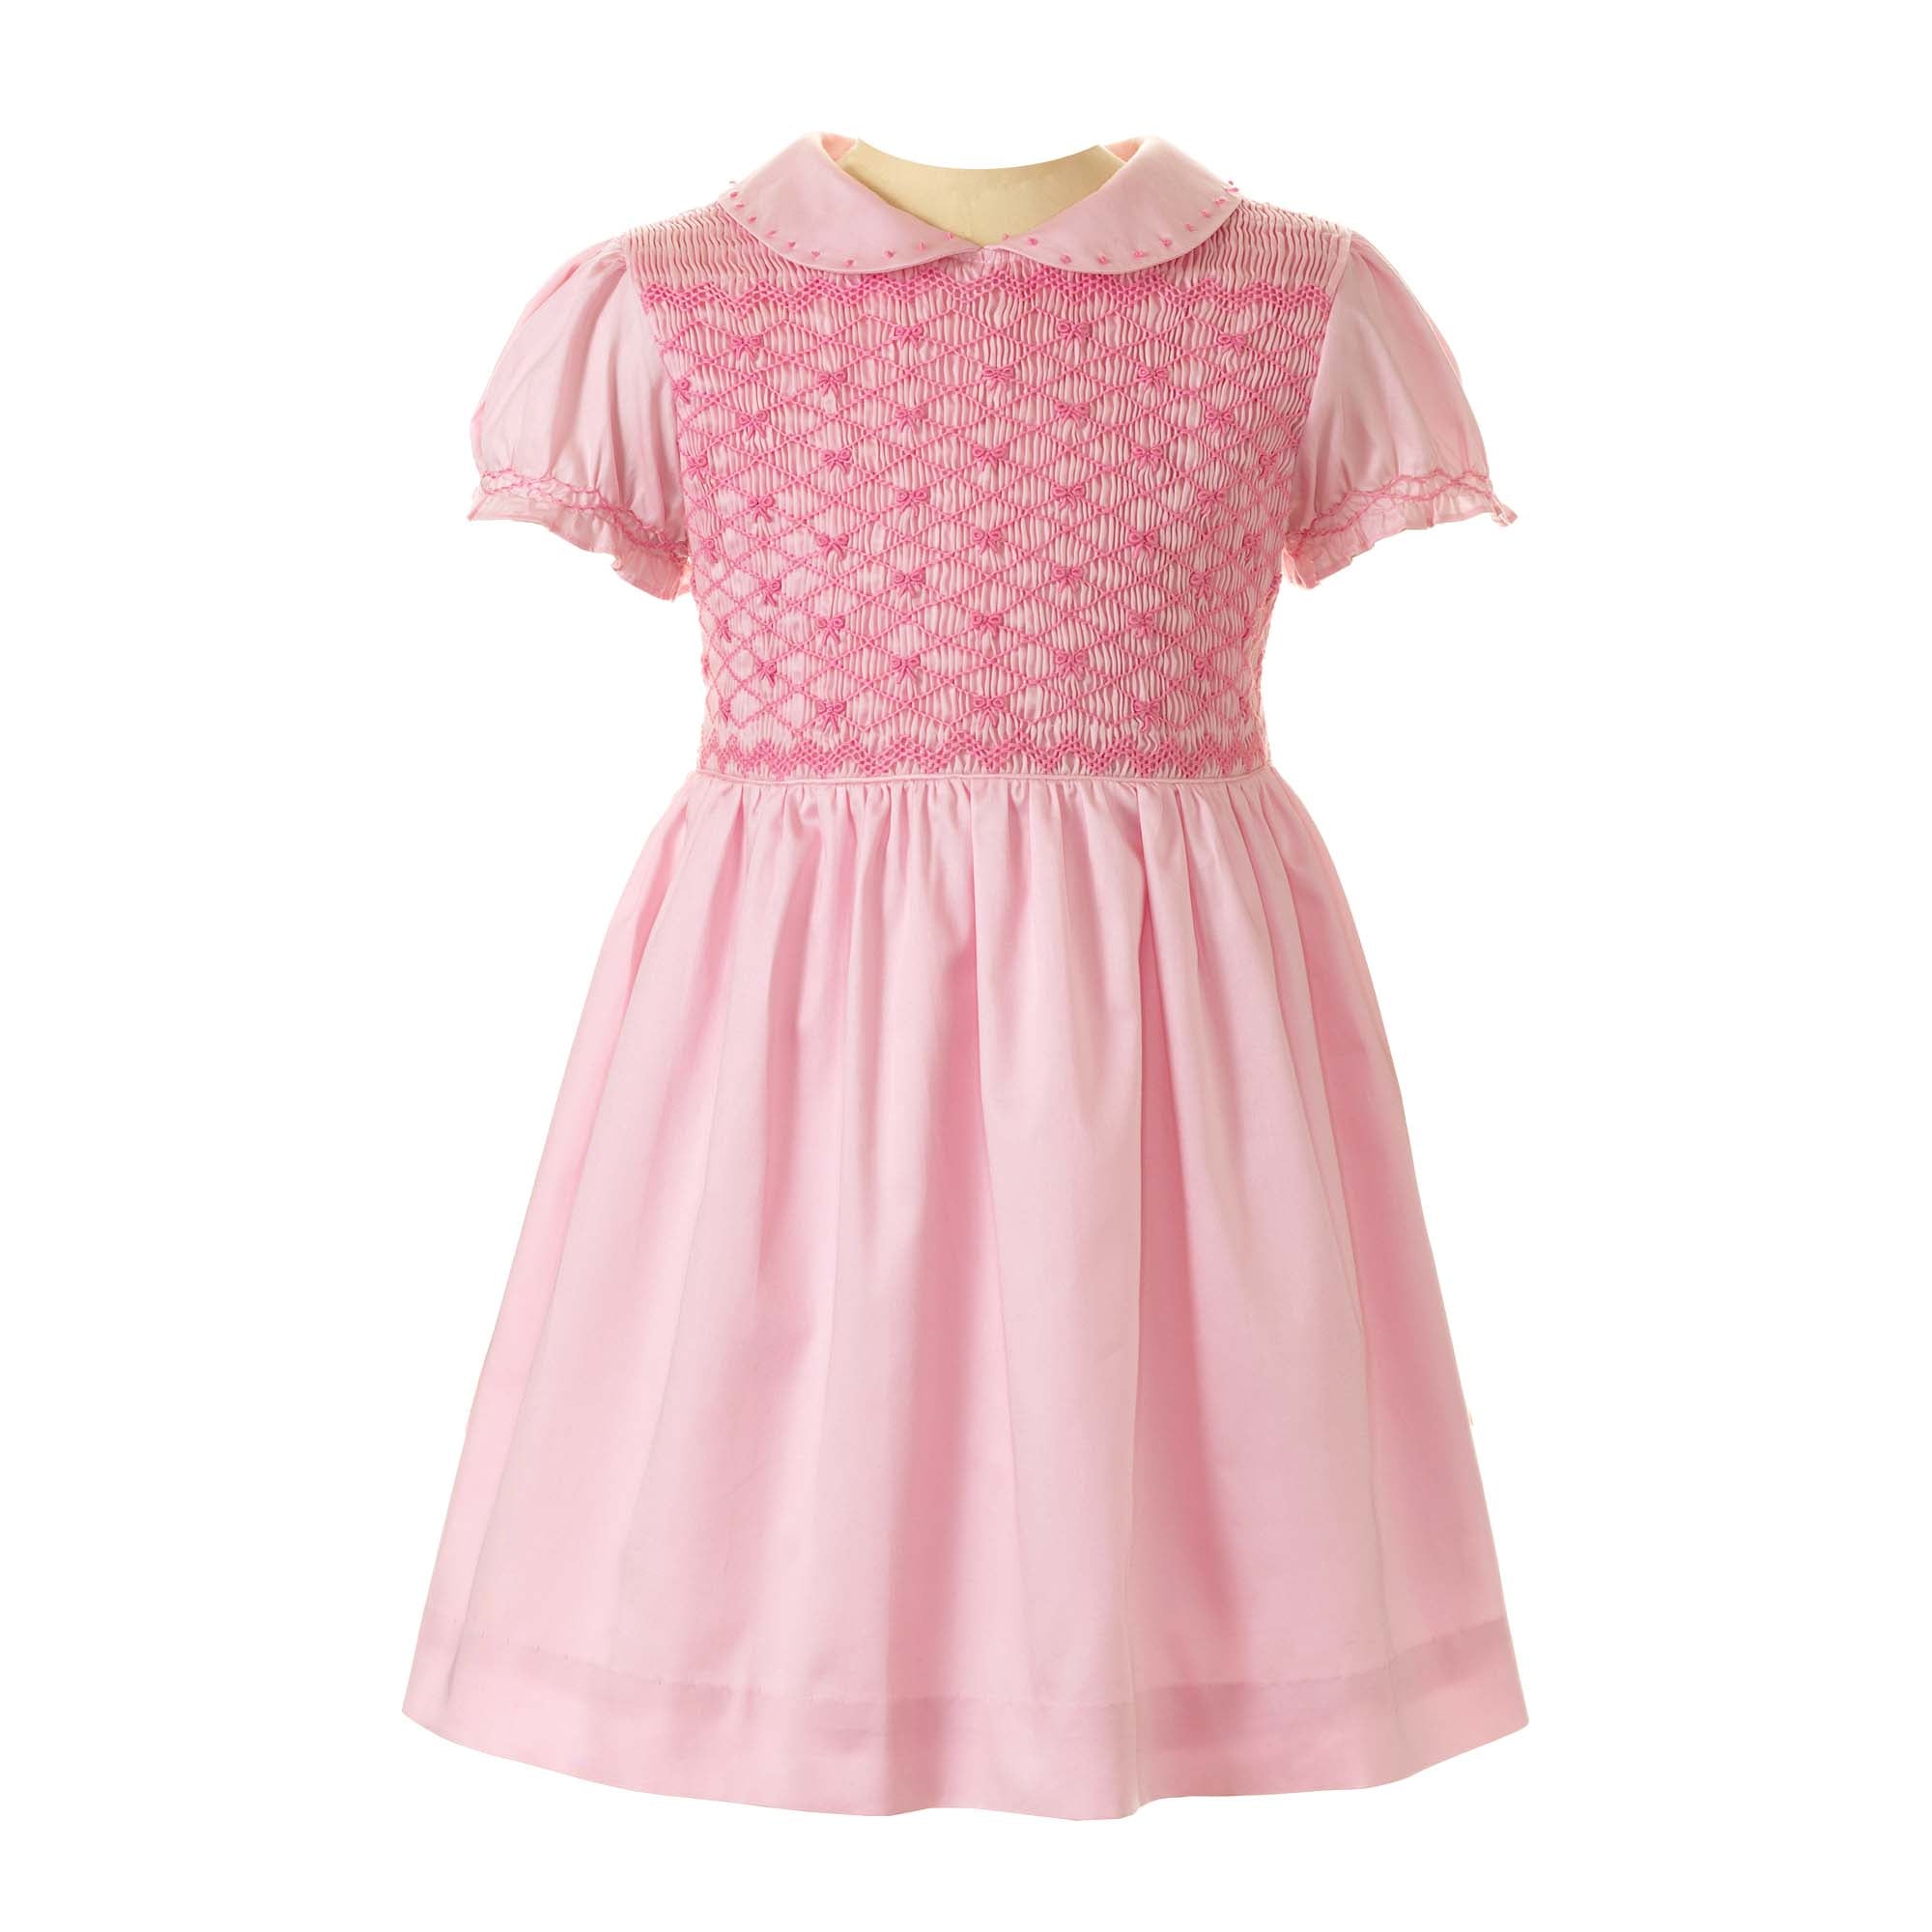 Pink Smocked Rachel Riley Dress